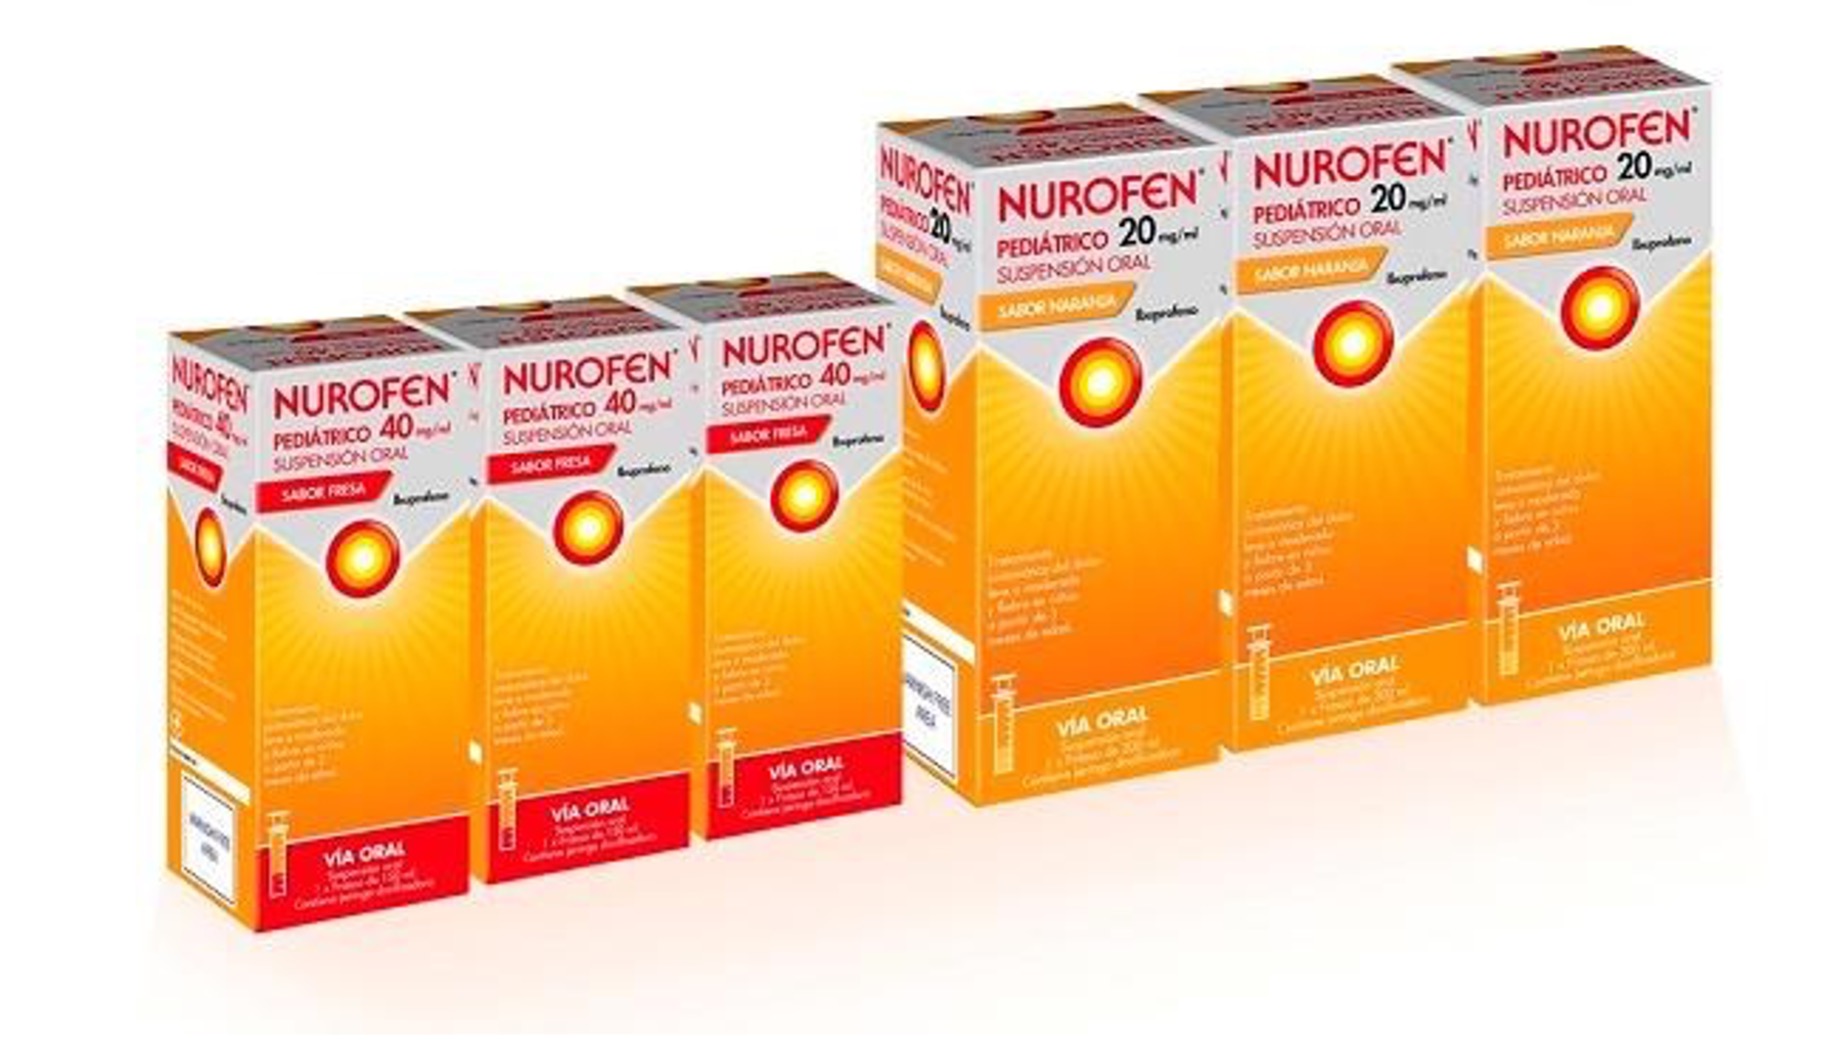 Nurofen Pediatrico Products